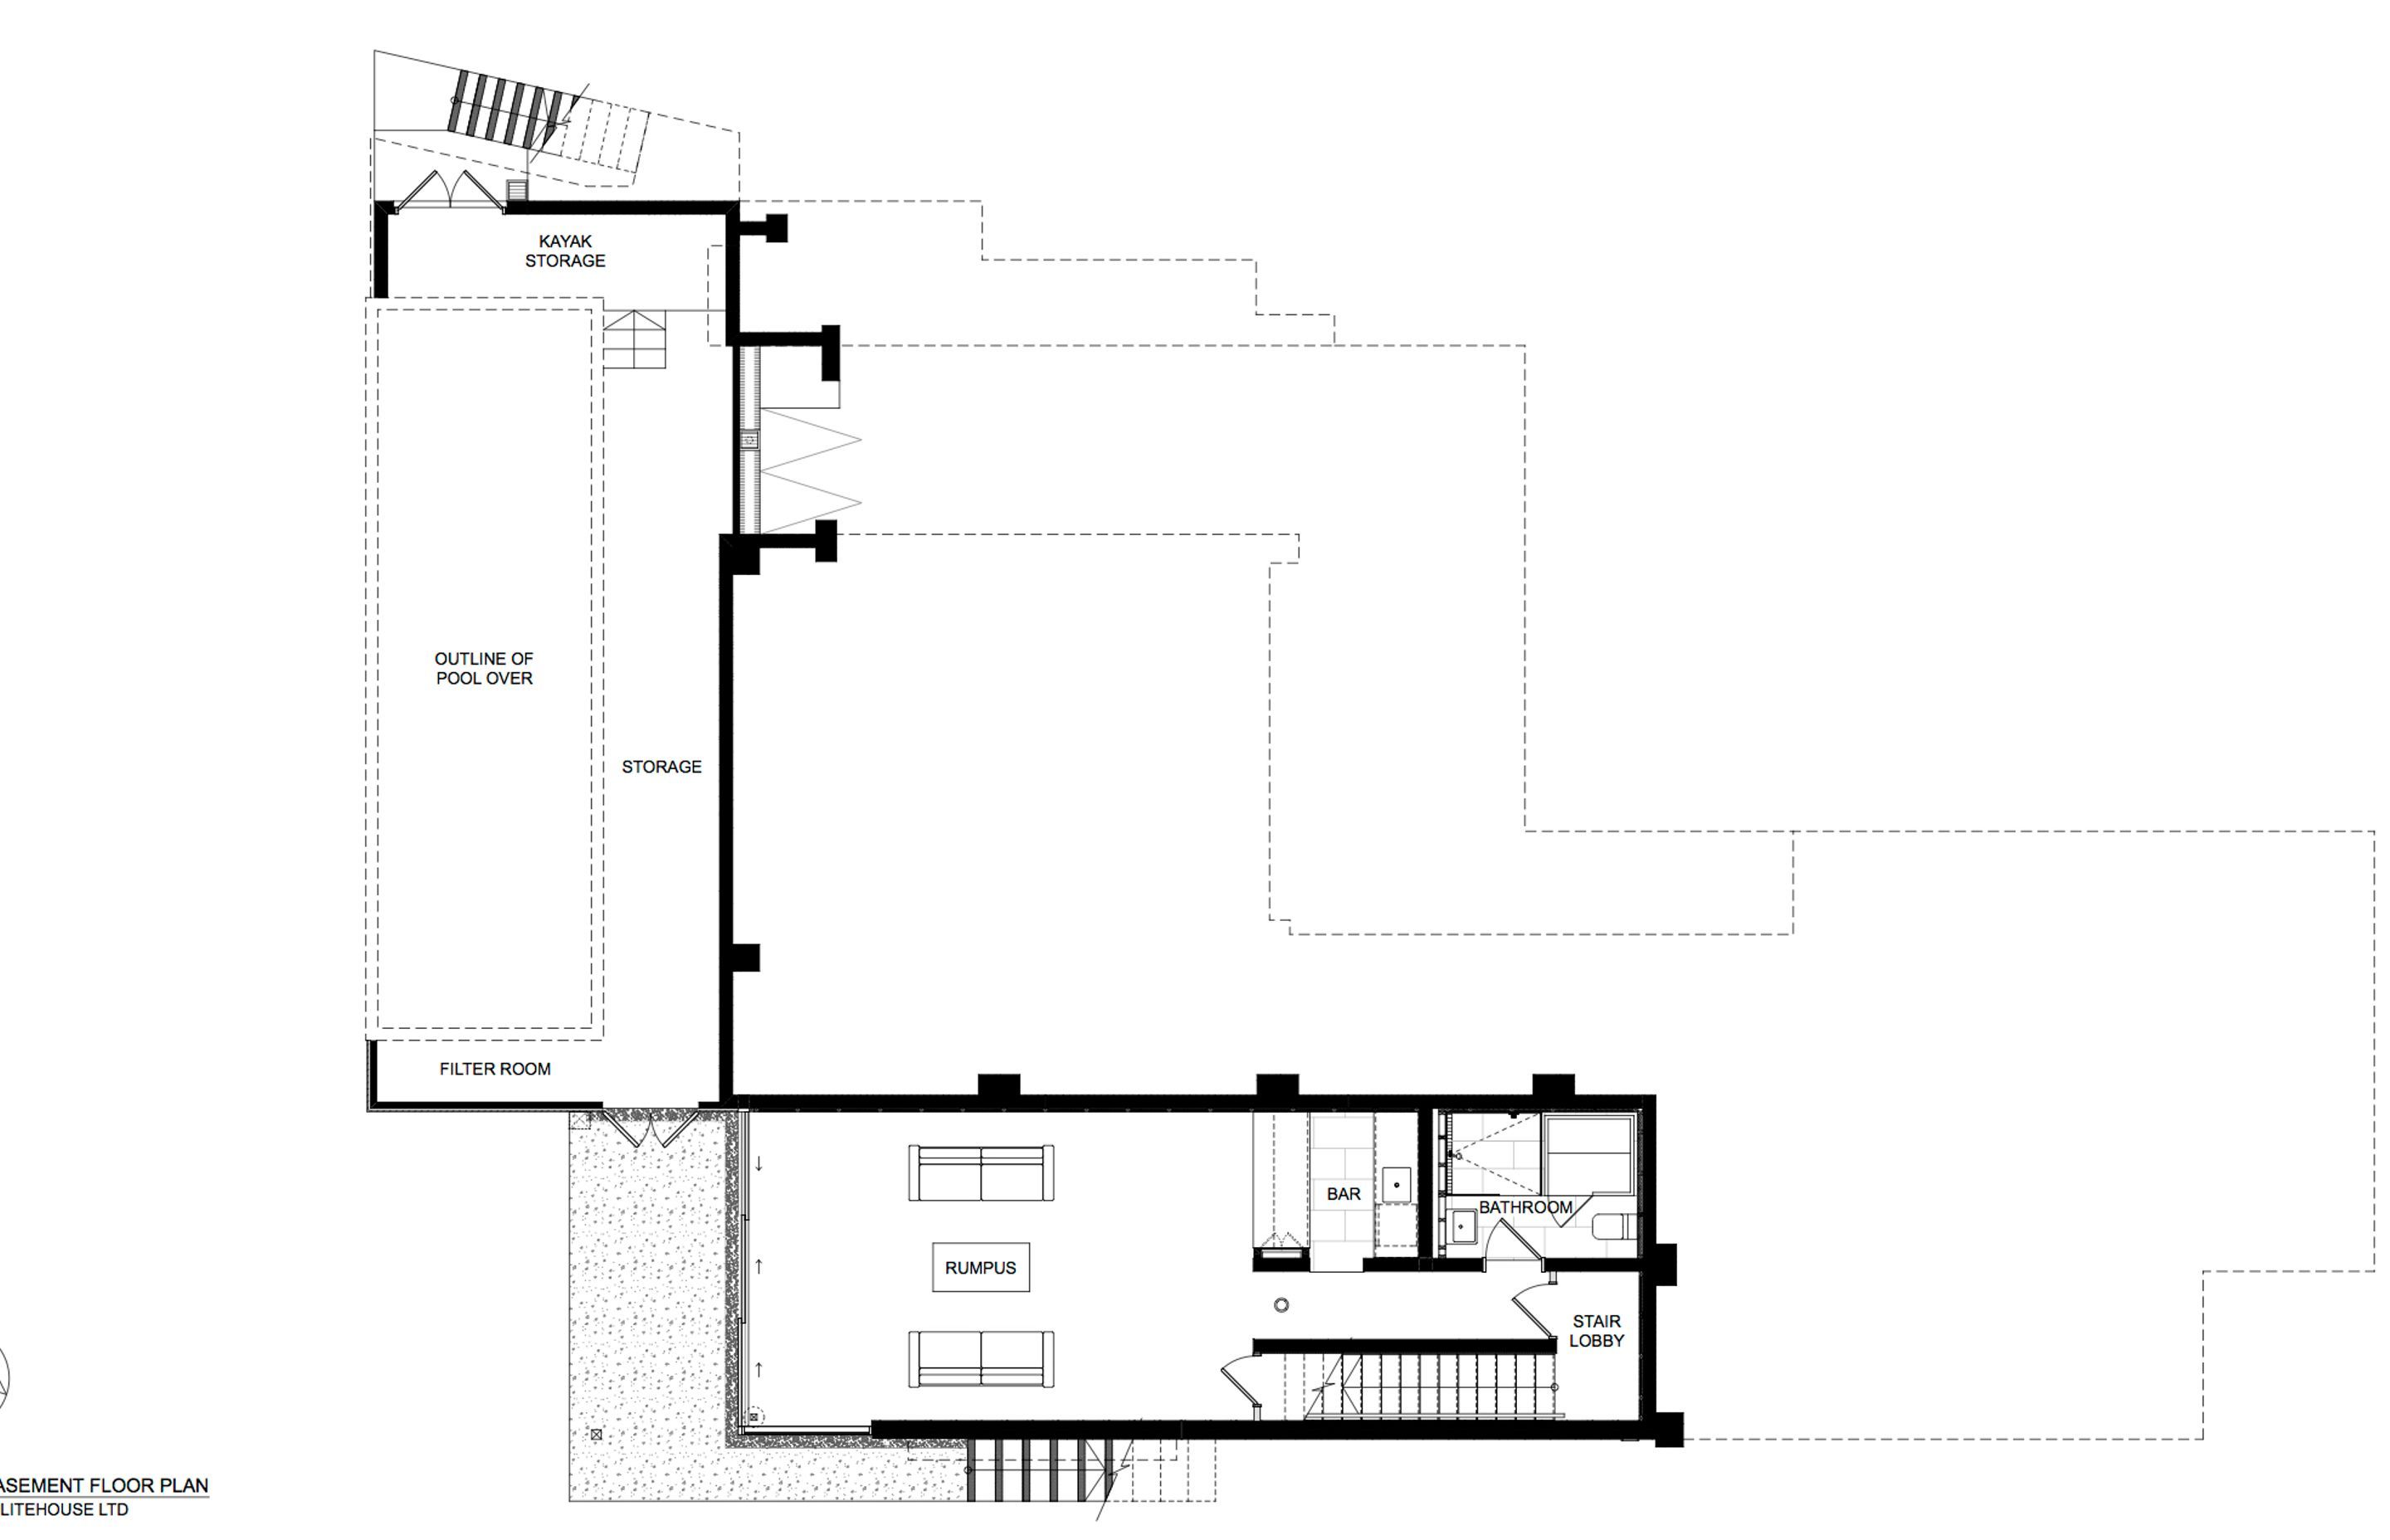 Basement floor plan  by Lite House.